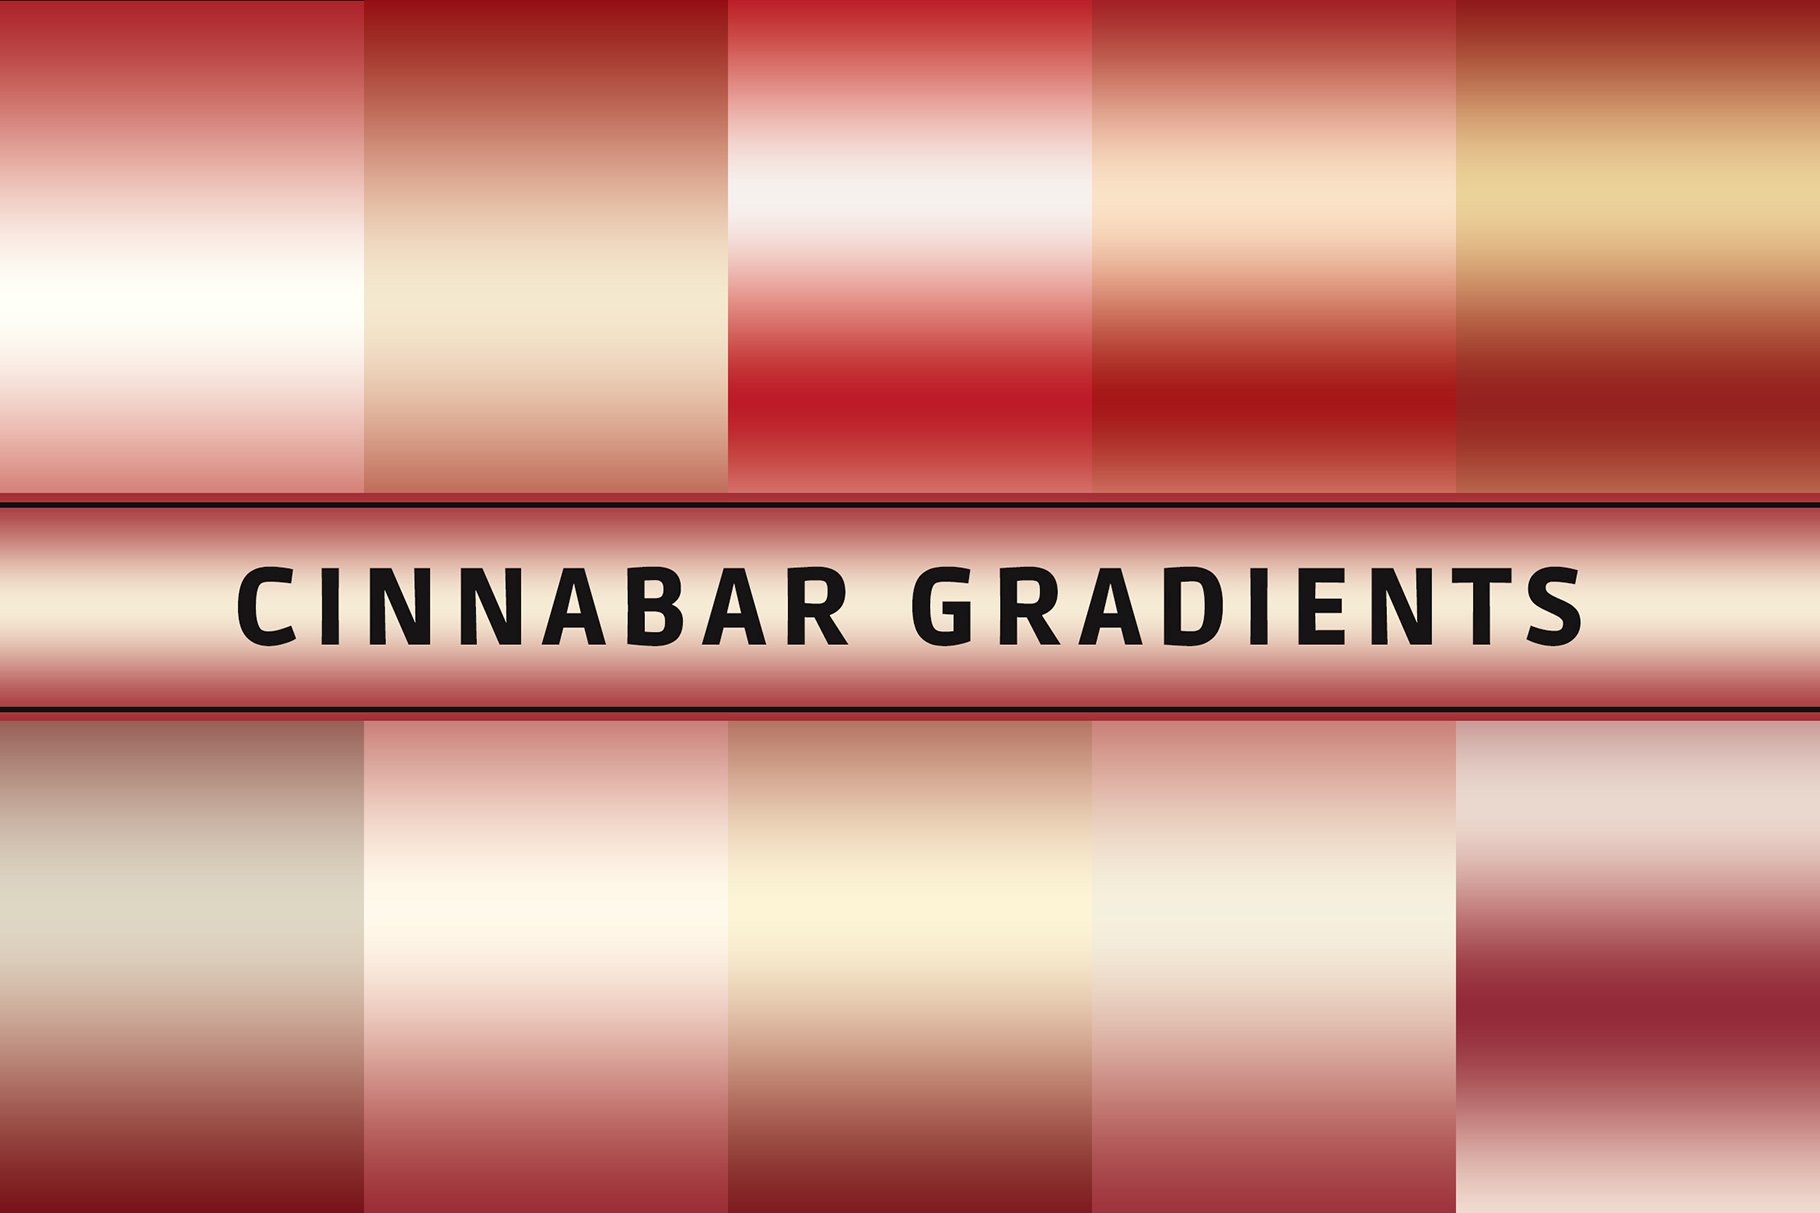 Cinnabar Gradients cover image.